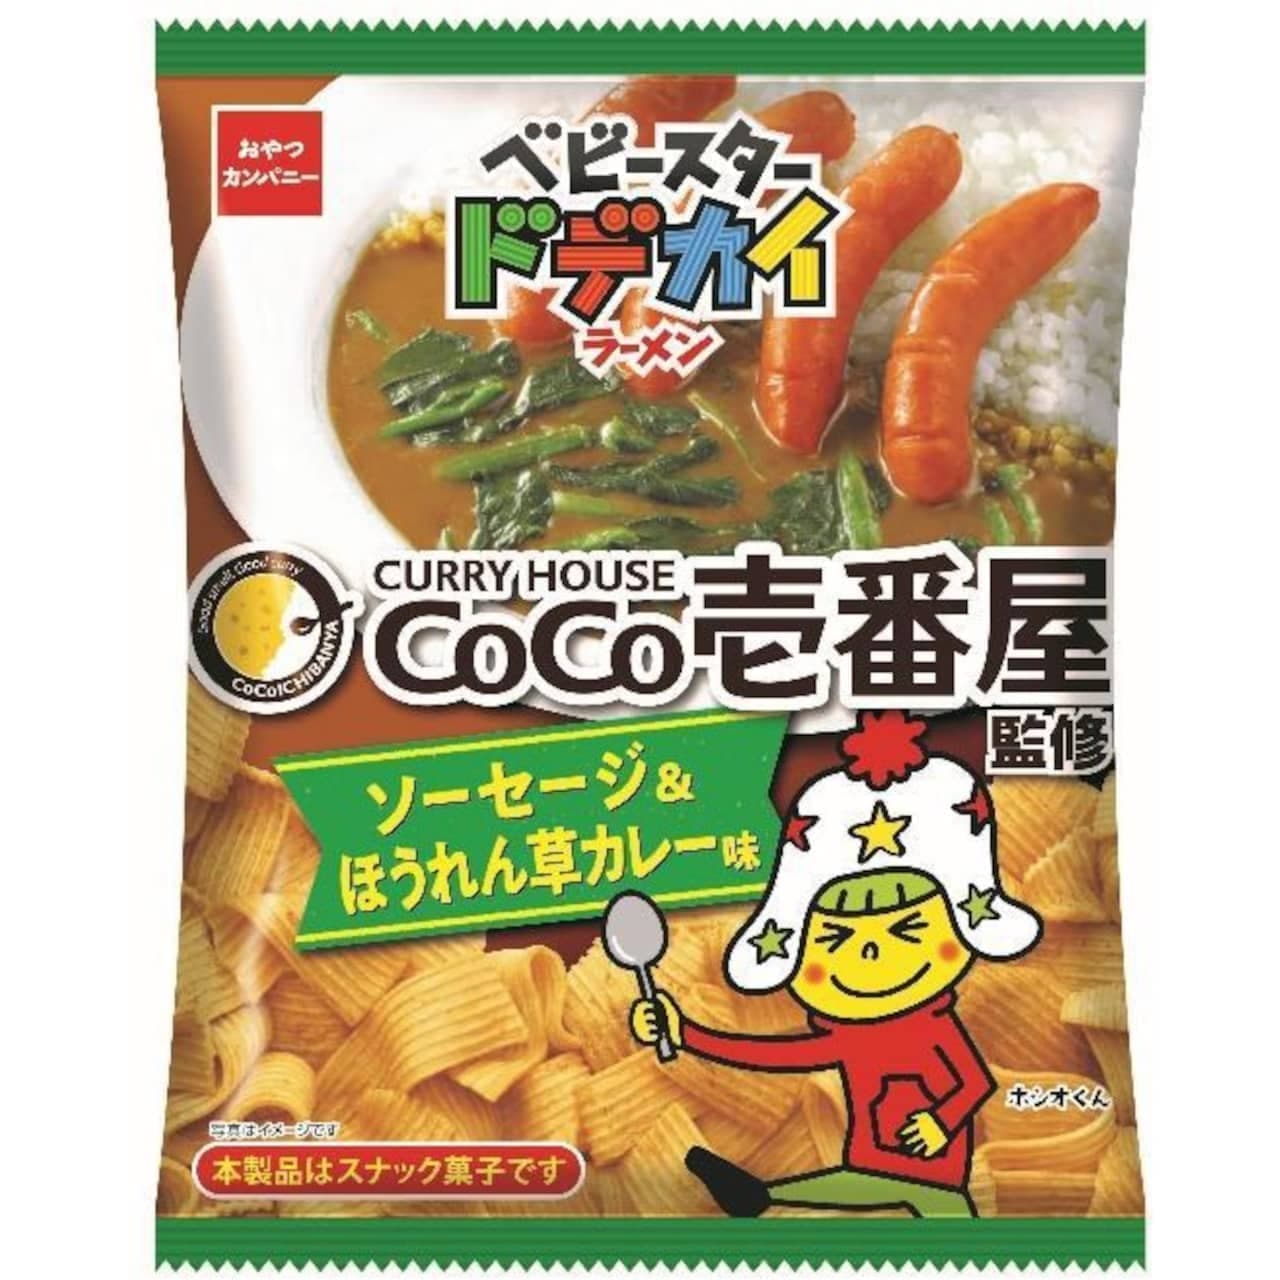 Coco Ichibanya "CoCo Ichibanya supervised Baby Star Dodekai Ramen Sausage & Spinach Curry Flavor".